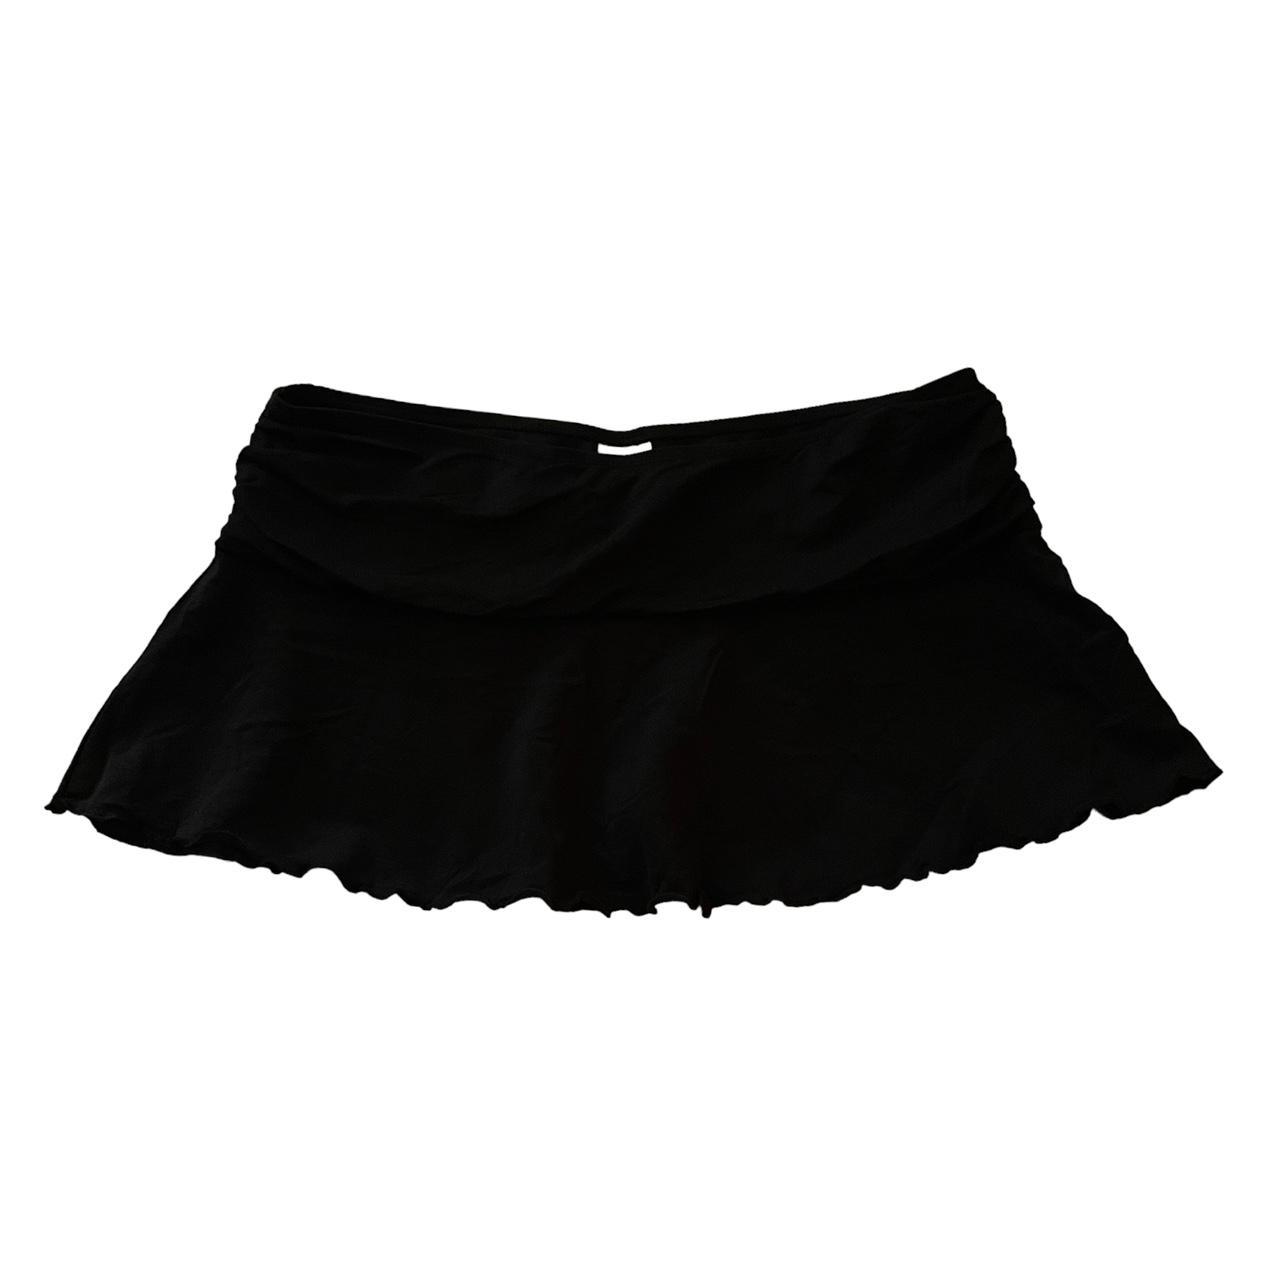 Body Glove Women's Black Skirt | Depop